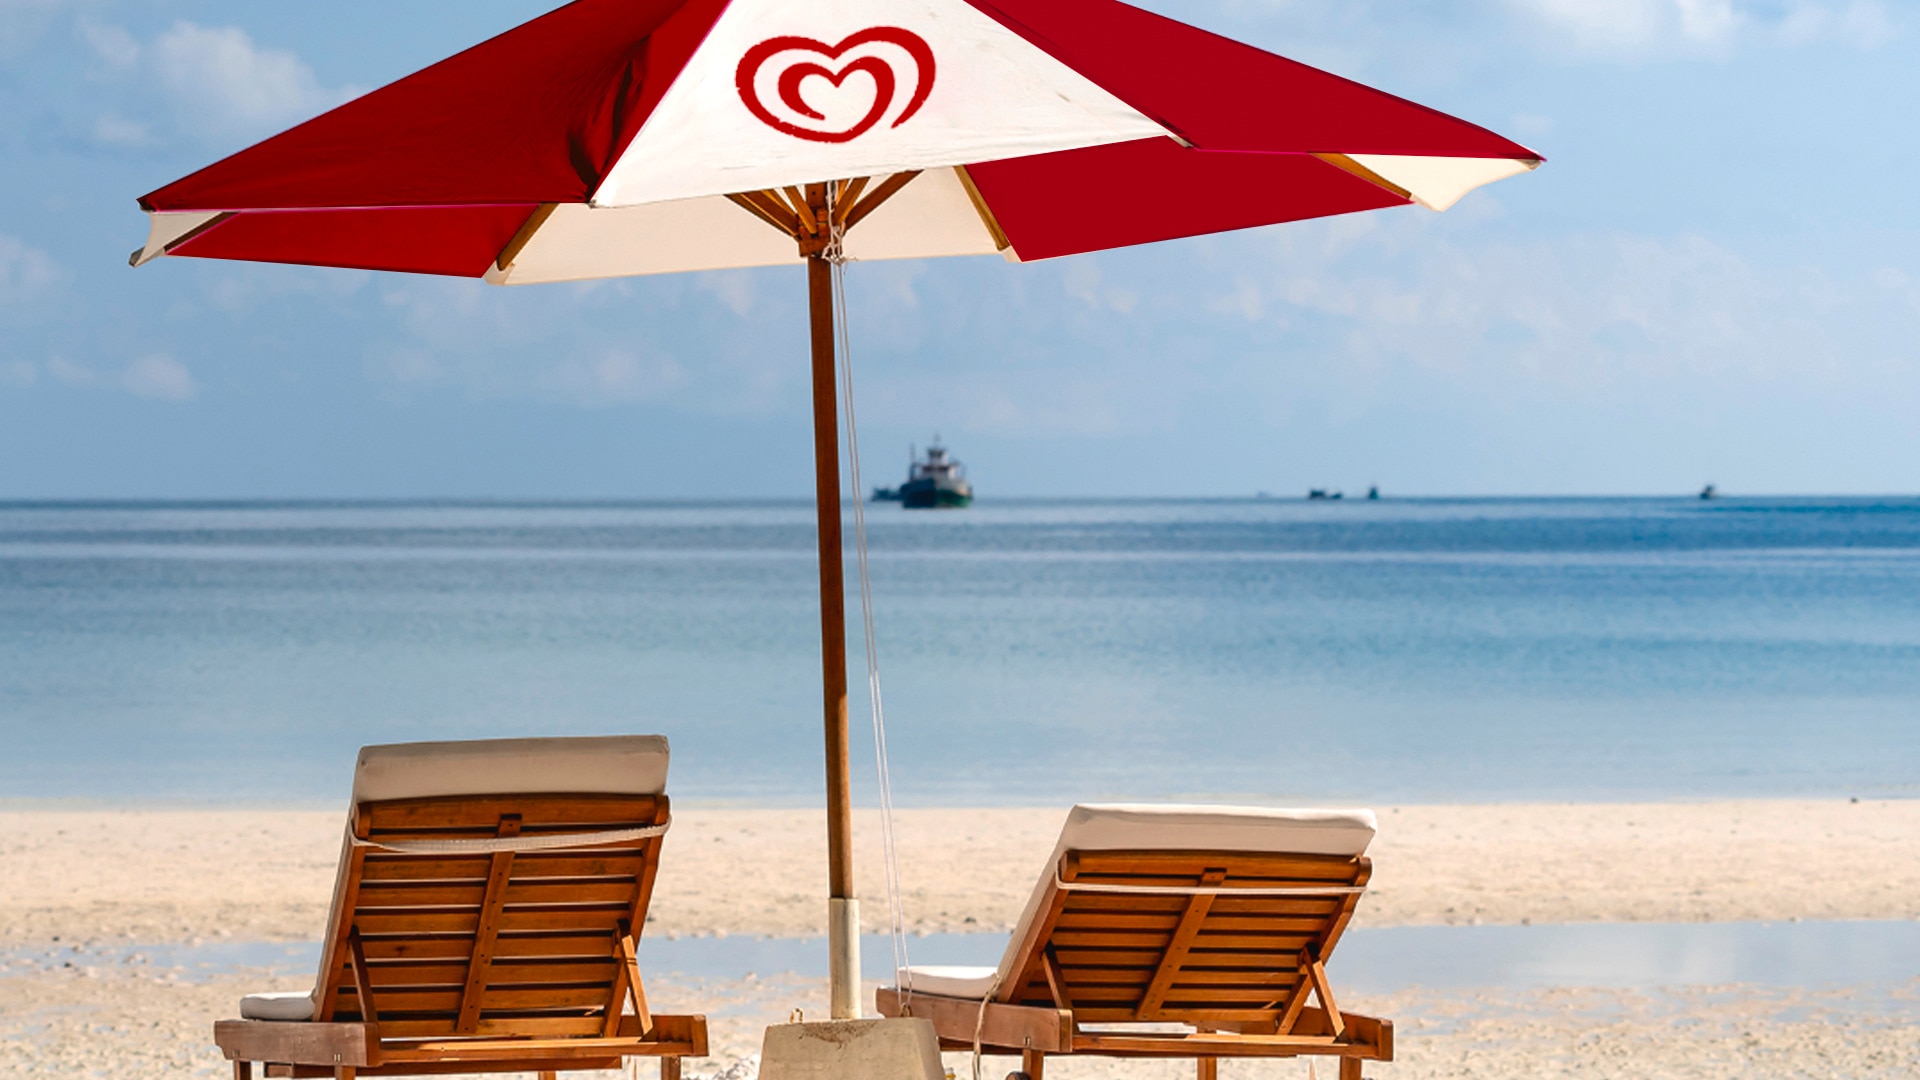 heart umbrella on beach